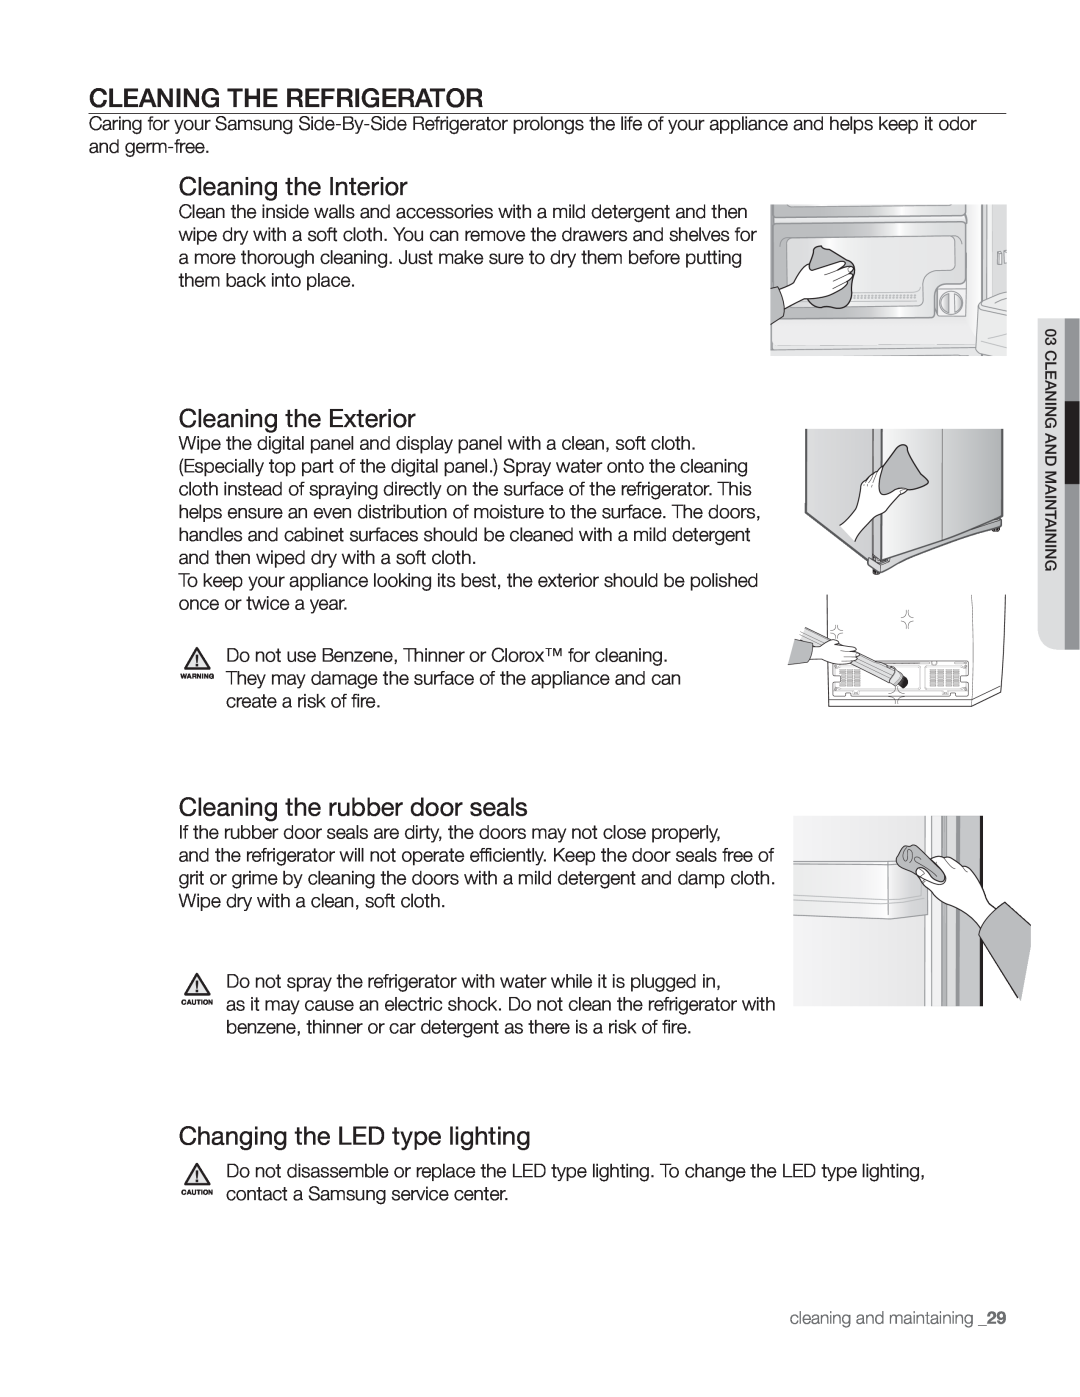 Samsung DA68-01890Q user manual Cleaning The Refrigerator, Cleaning the Interior, Cleaning the Exterior 